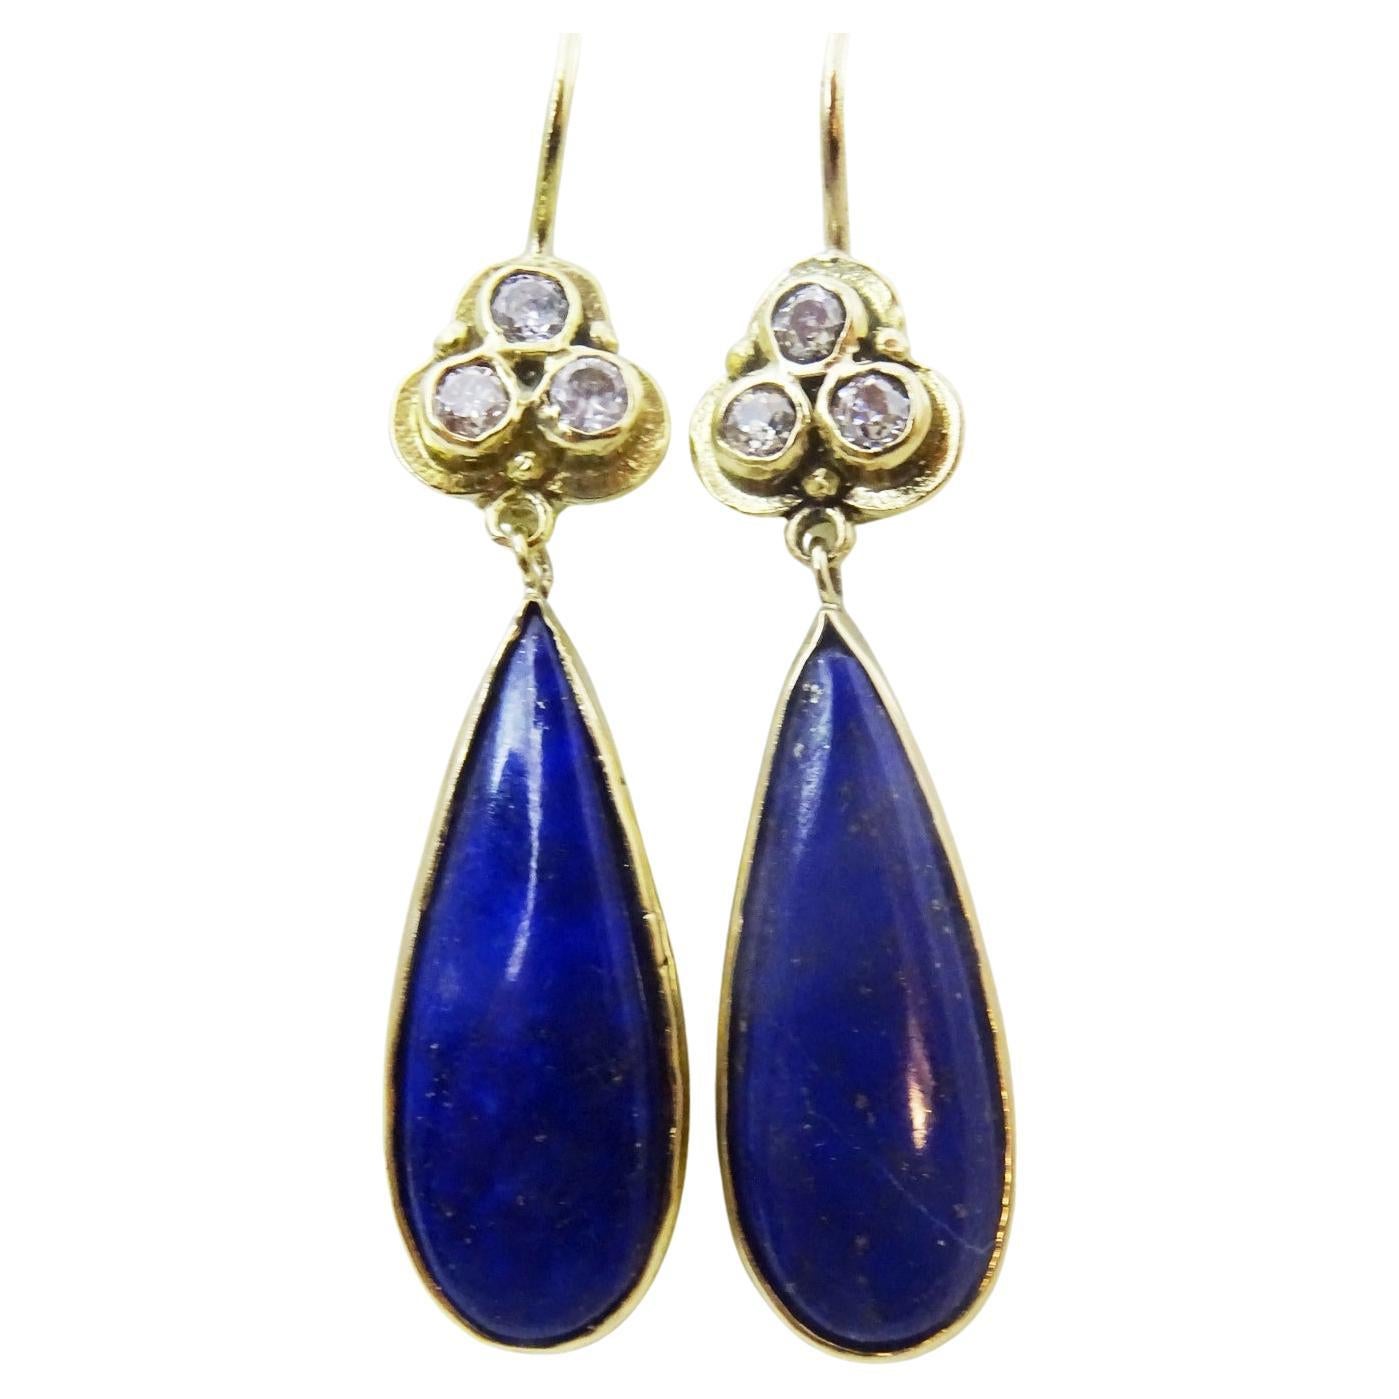  Handmade 18 karat gold Diamond and Lapis Lazuli Earrings For Sale